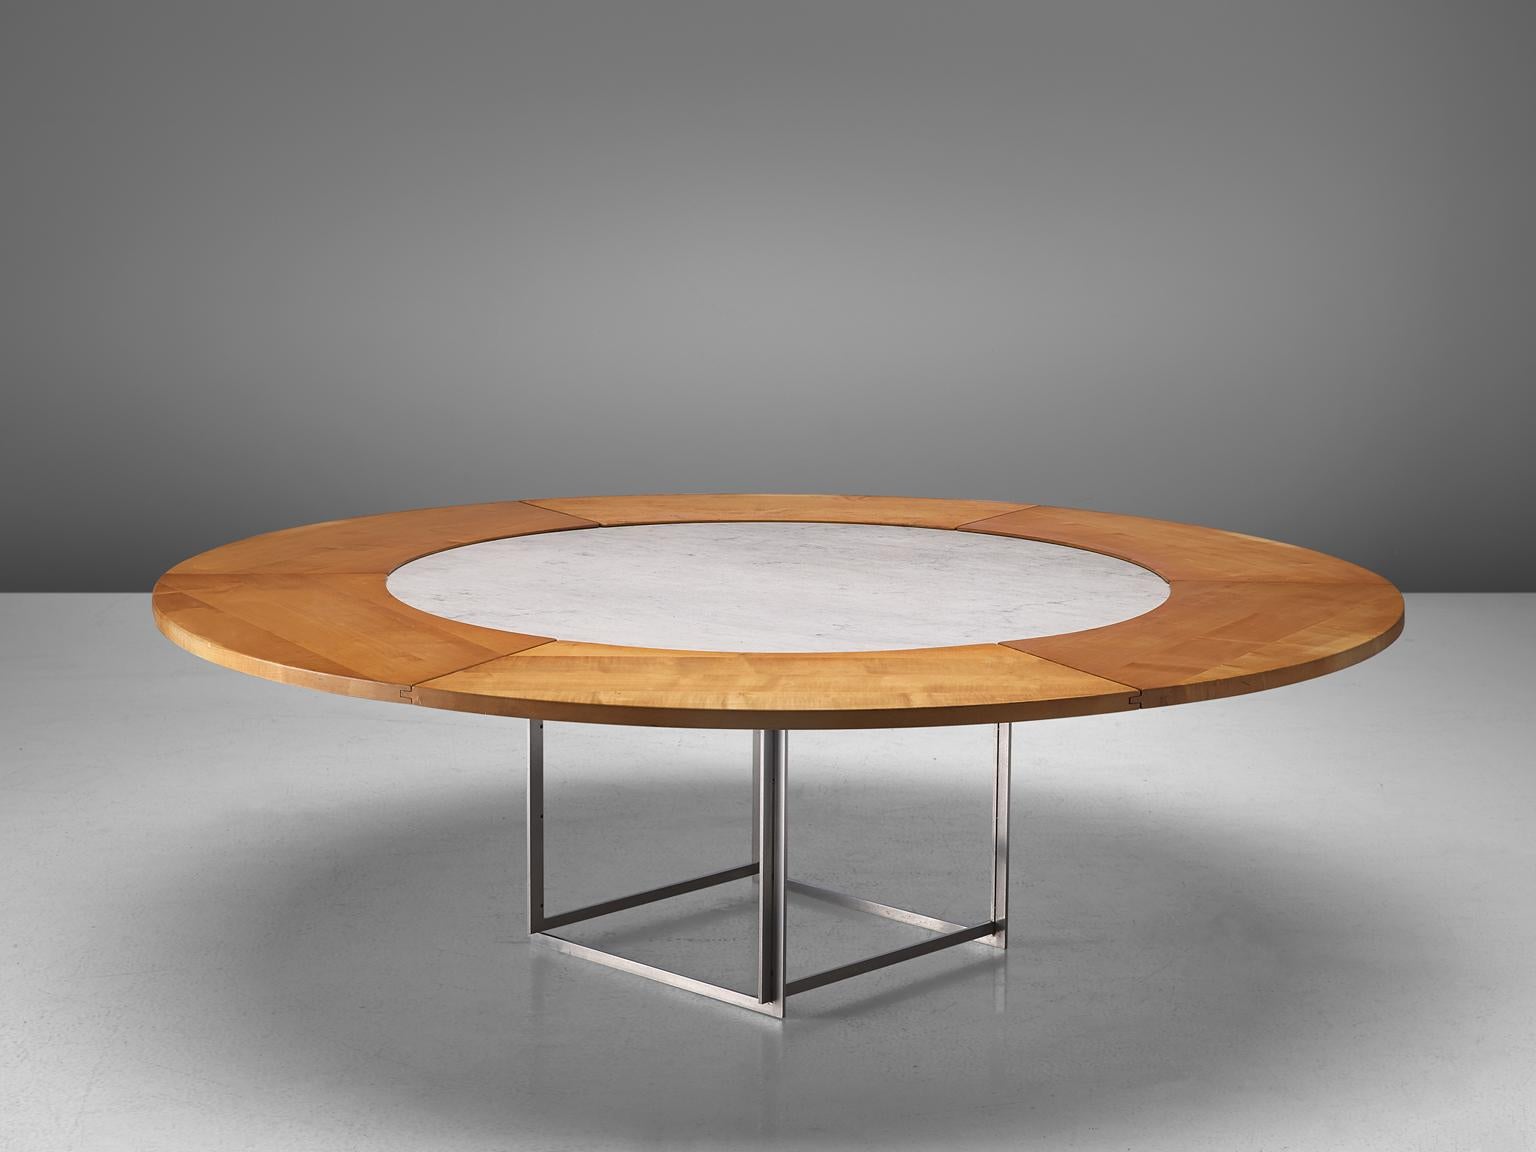 Poul Kjaerholm for E. Kold Christensen, PK54 and PK54A dining table, marble, steel, veneered wood, Denmark, design 1963.

Versatile PK54+PK54A table, designed by Danish deisgner and architect Poul Kjærholm in 1963. This model has been produced by